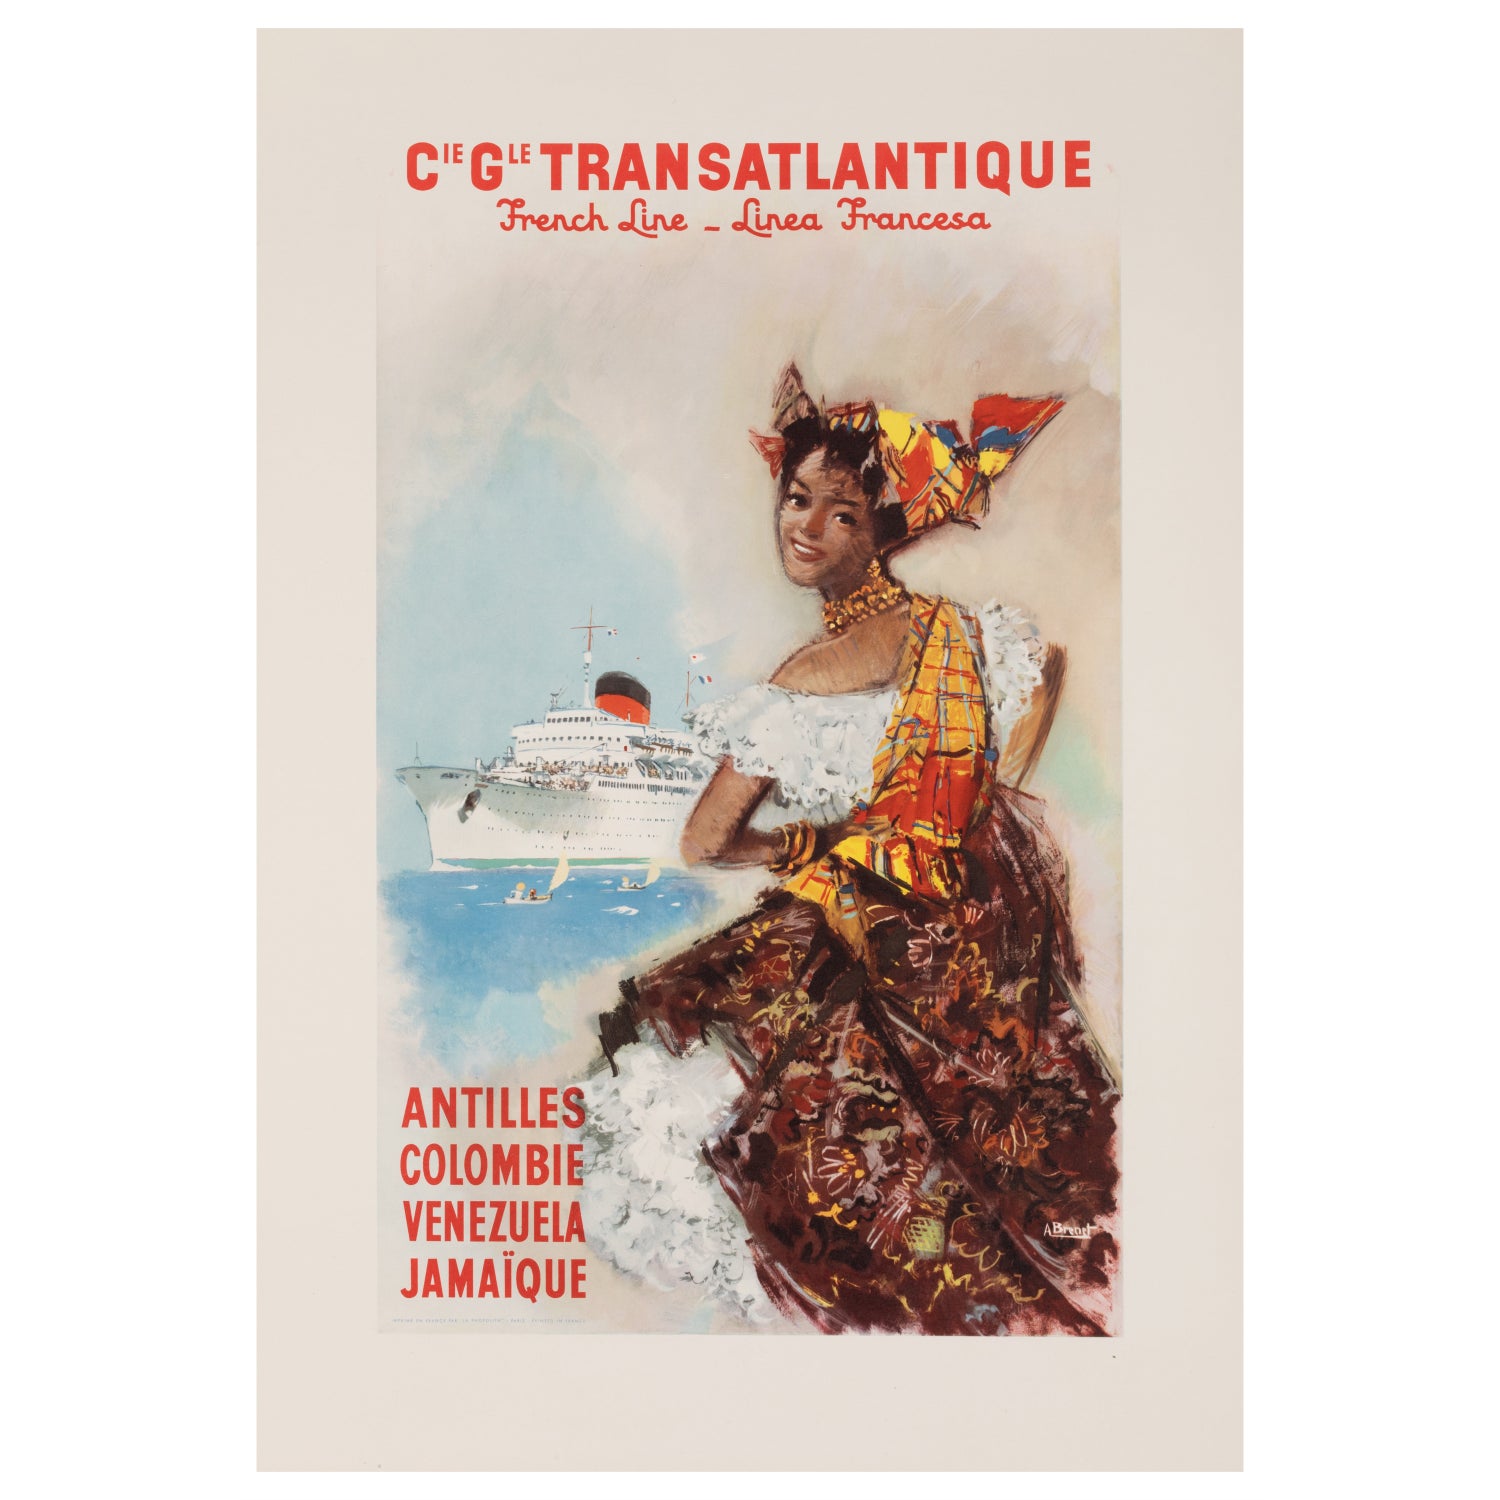 Affiche ancienne – Air France, Paris - New York, New York - Paris. –  Galerie 1 2 3